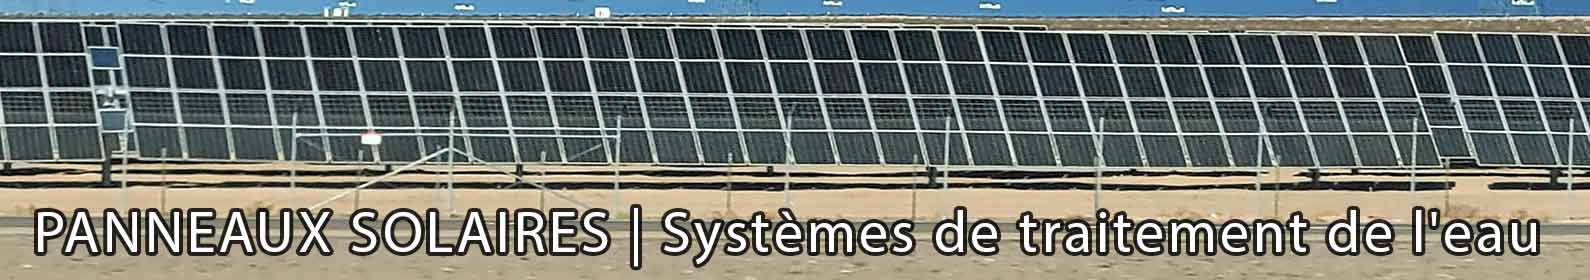 french-solar-panels-banner